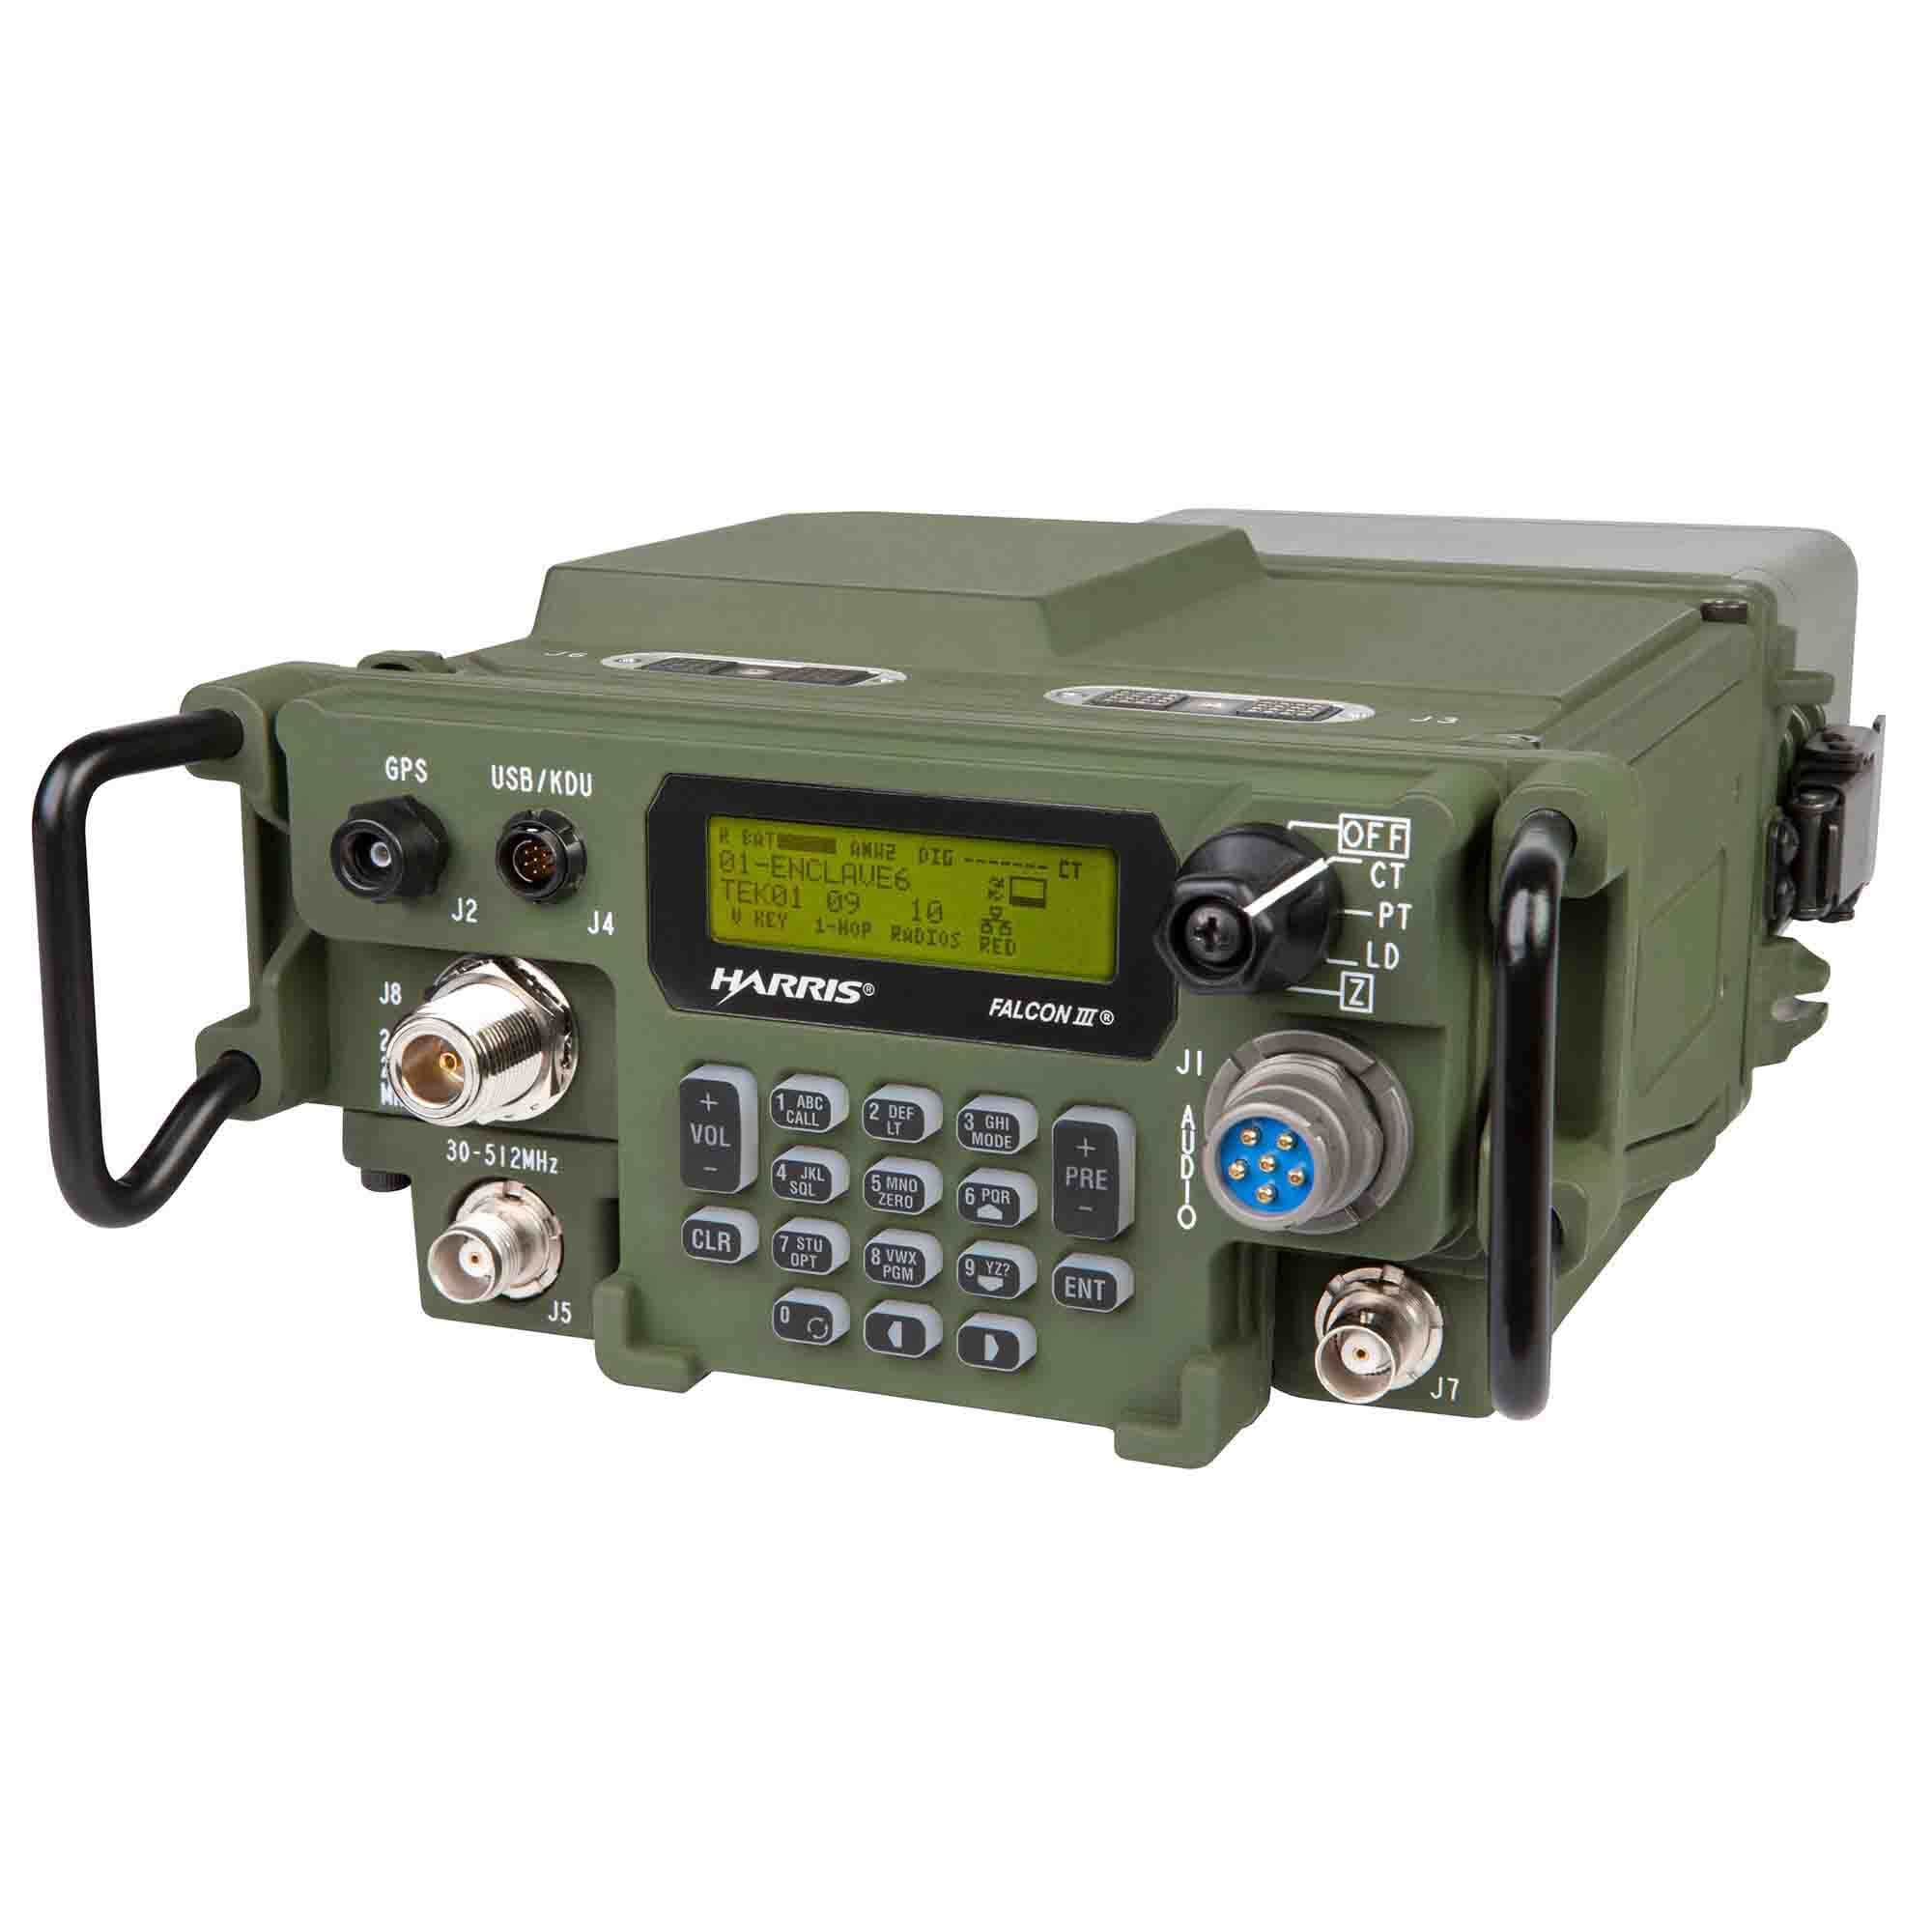 L3Harris – AN/PRC-117G Multiband Networking Manpack radio